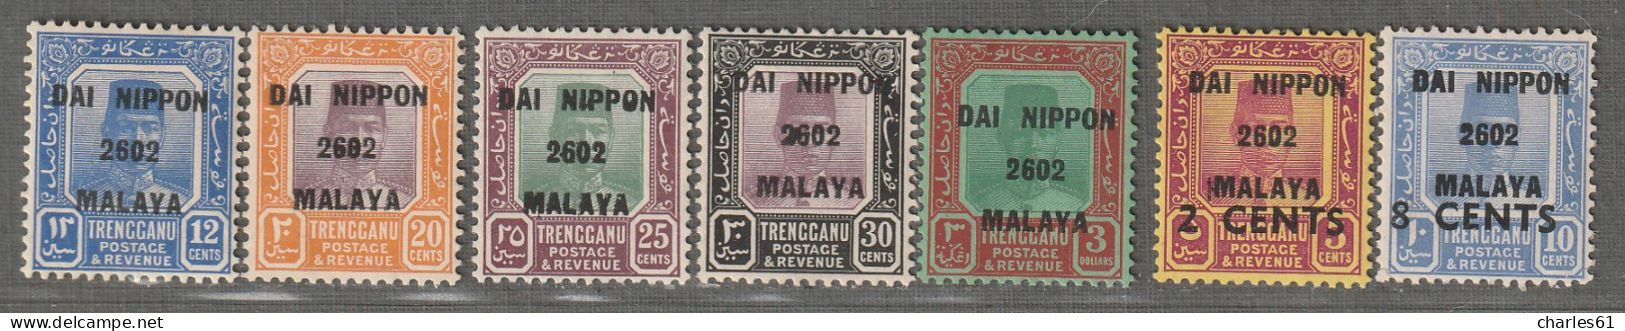 TRENGGANU - OCCUPATION JAPONAISE - N°29/35 * (1942) "Dai Nippon 2602 Malaya" - Ocupacion Japonesa